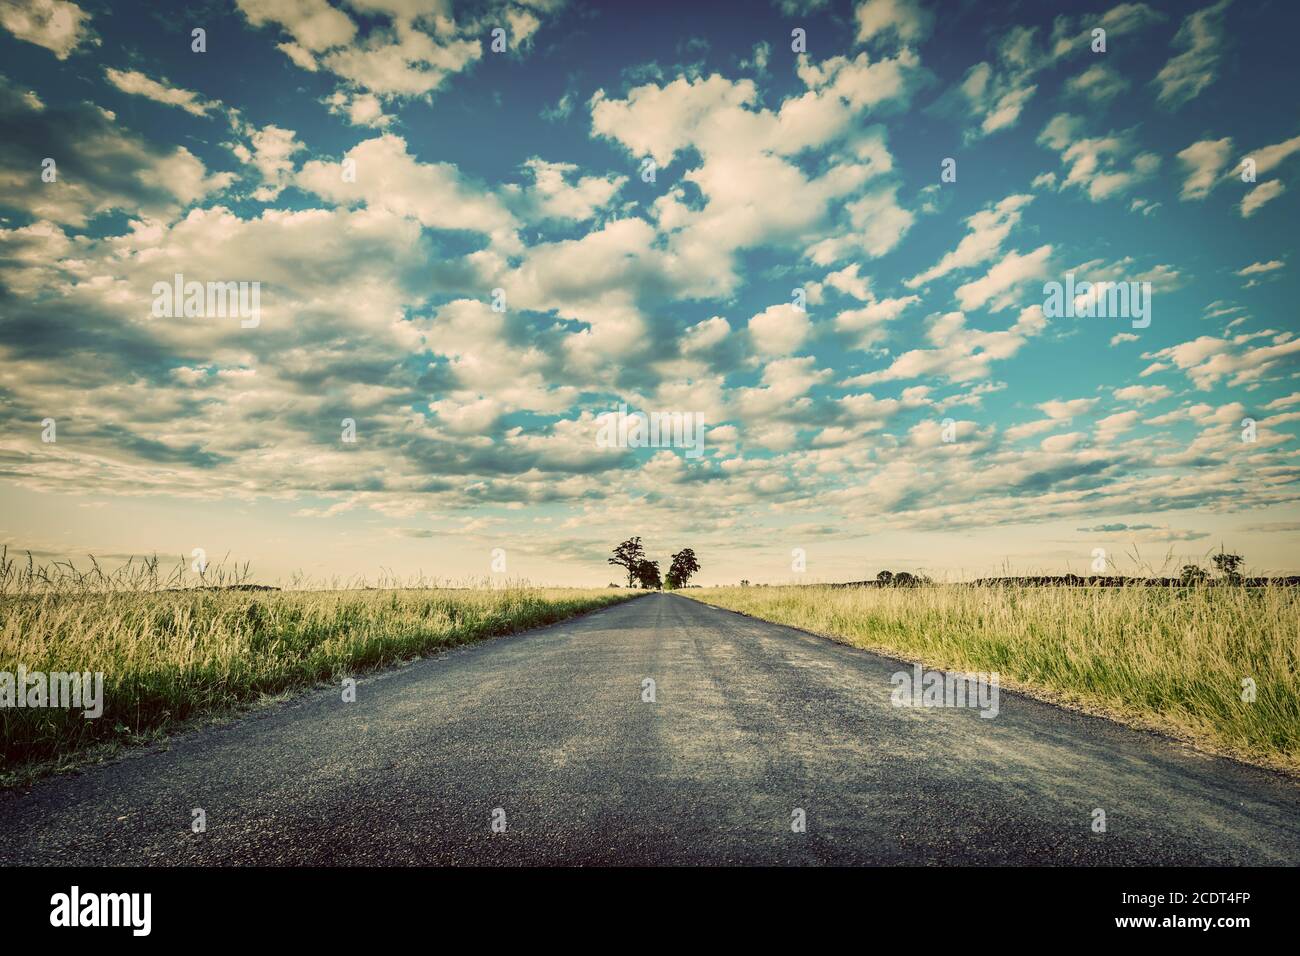 Empty straight long asphalt road. Concepts of travel, adventure, destination, transport etc. Stock Photo